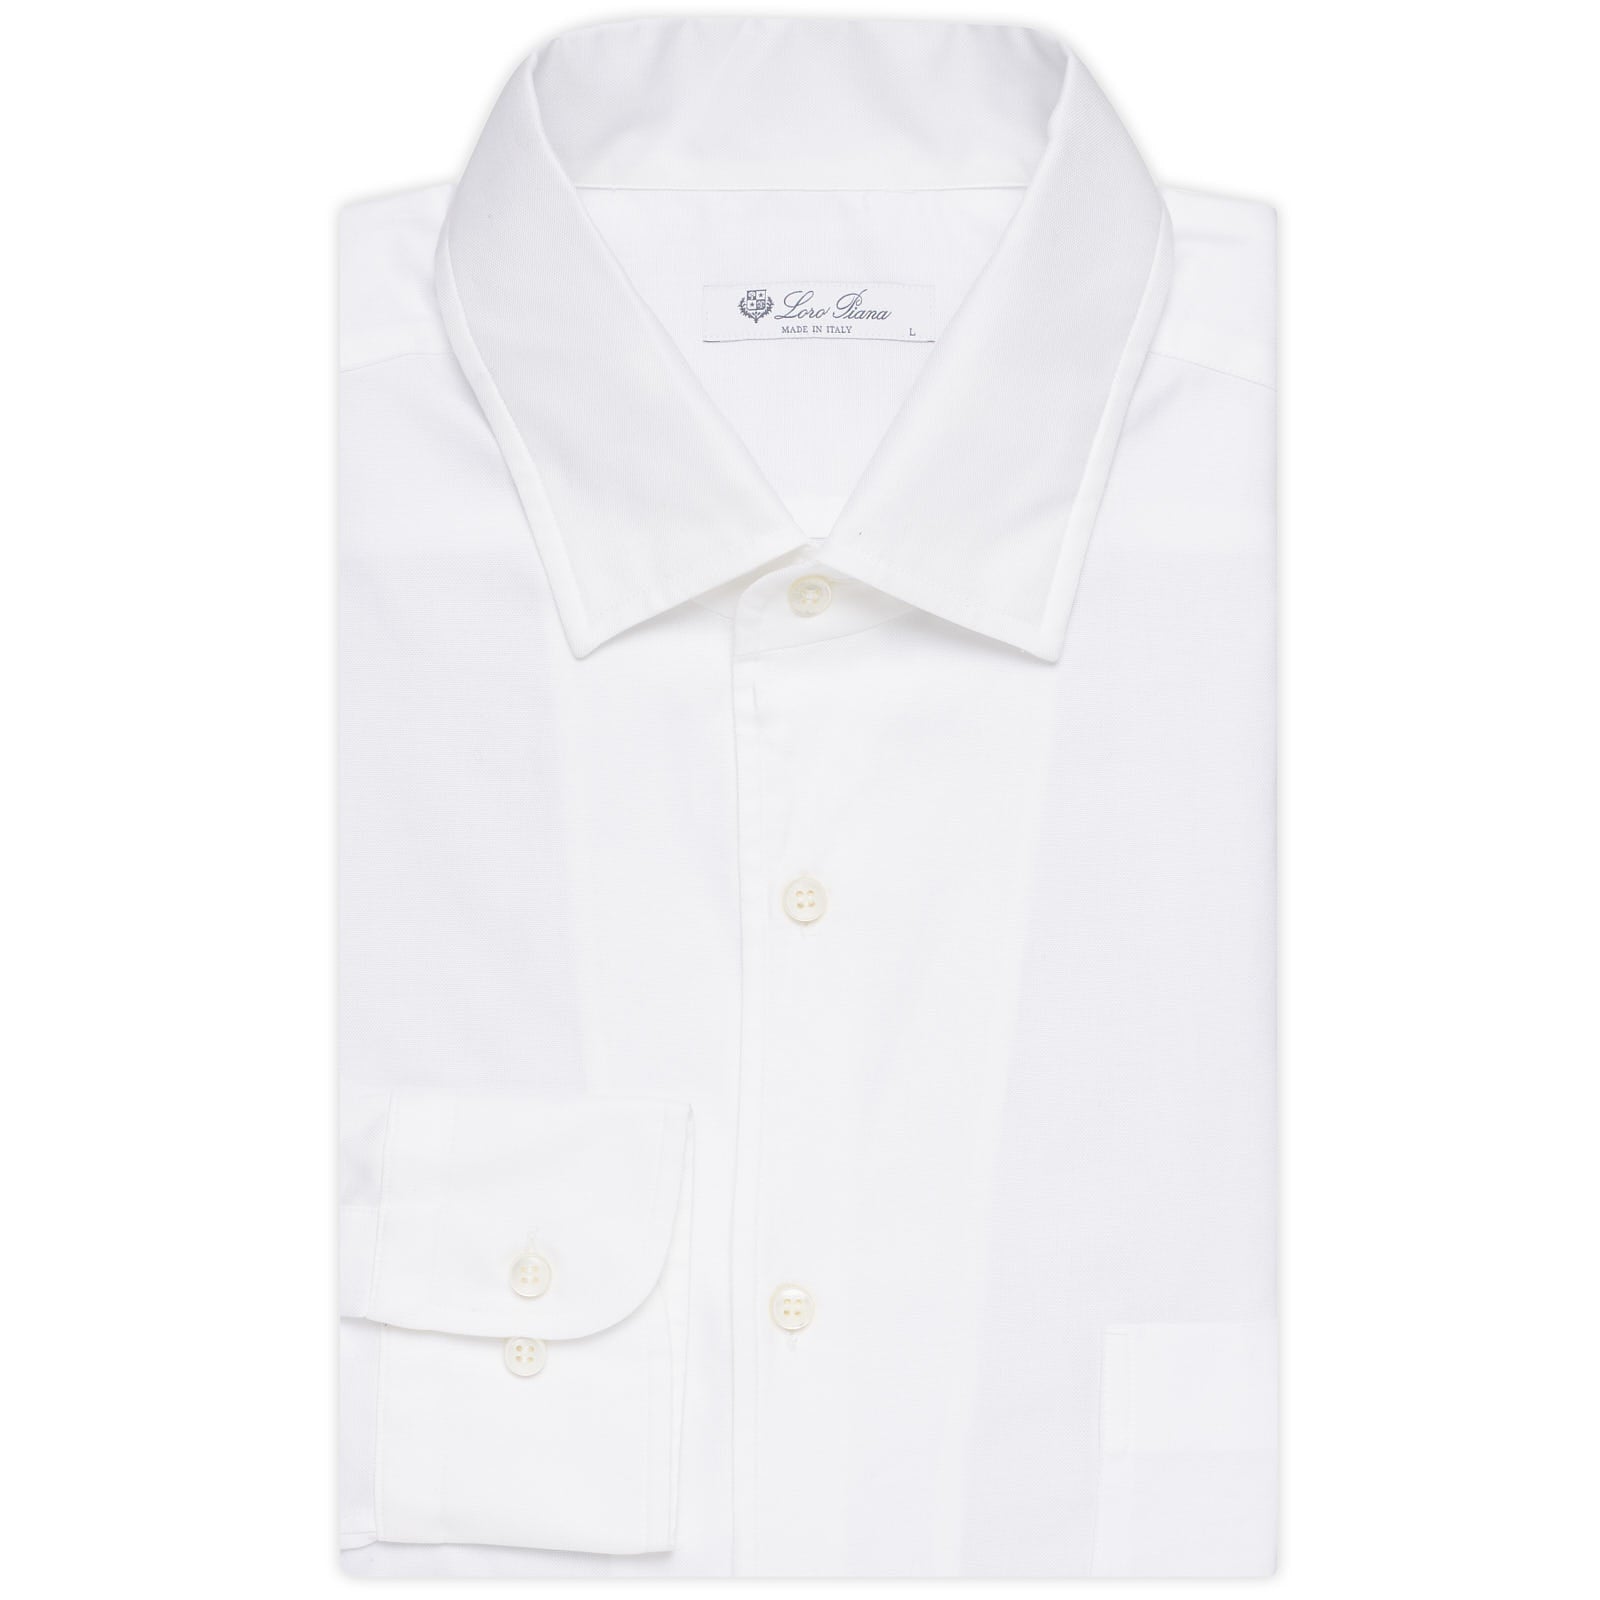 LORO PIANA "André" White Oxford Cotton 1 Pocket Dress Shirt NEW US L